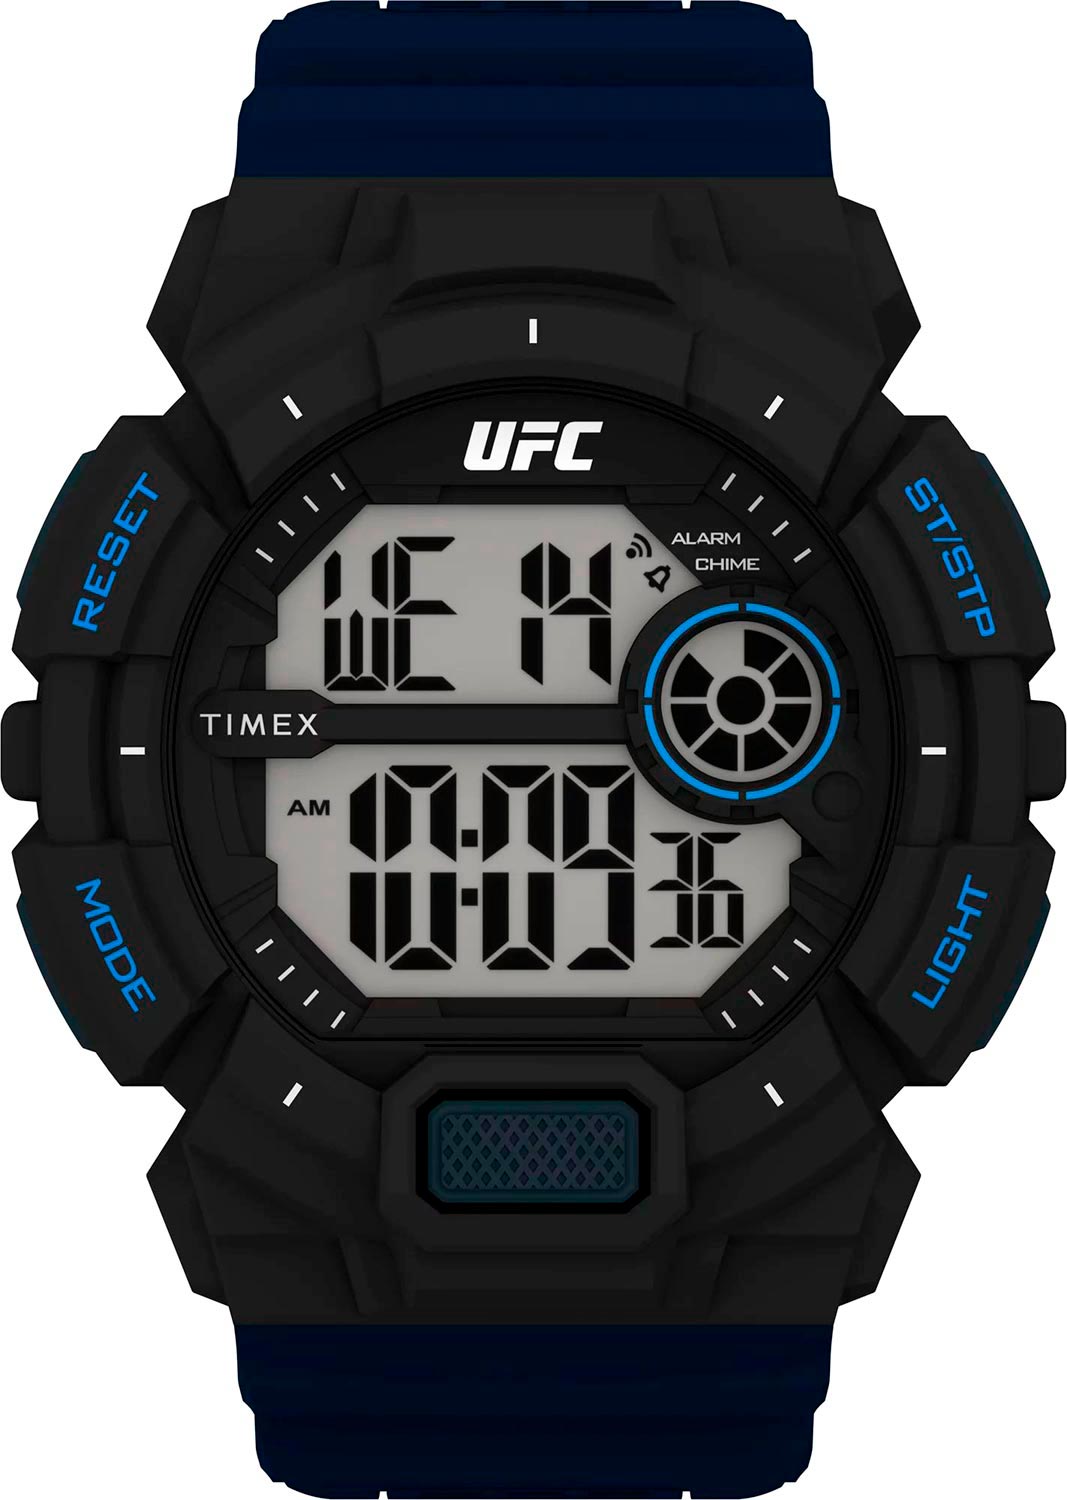   Timex UFC TW5M53500  